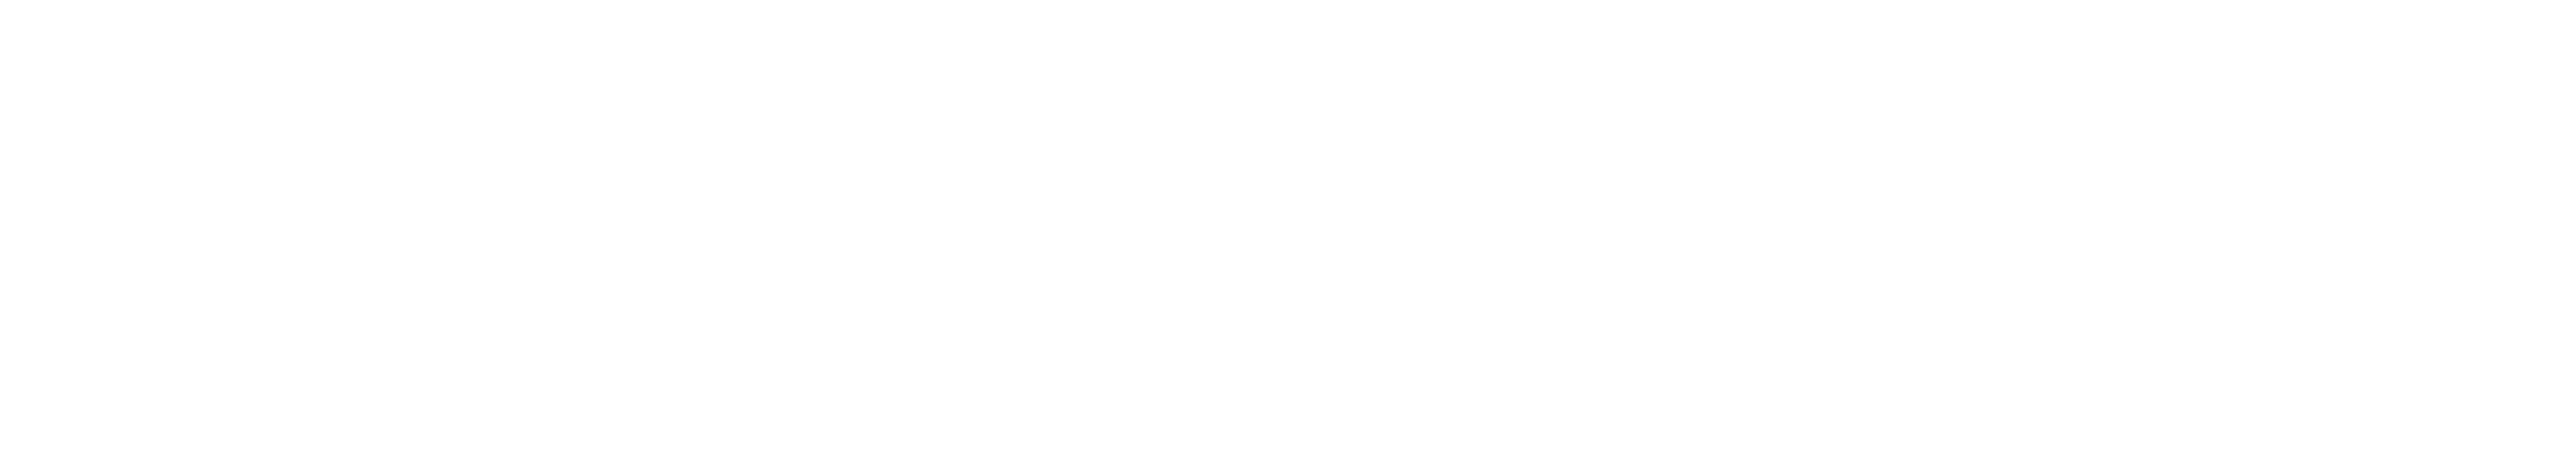 Business Wire Logo Main - White Transparent